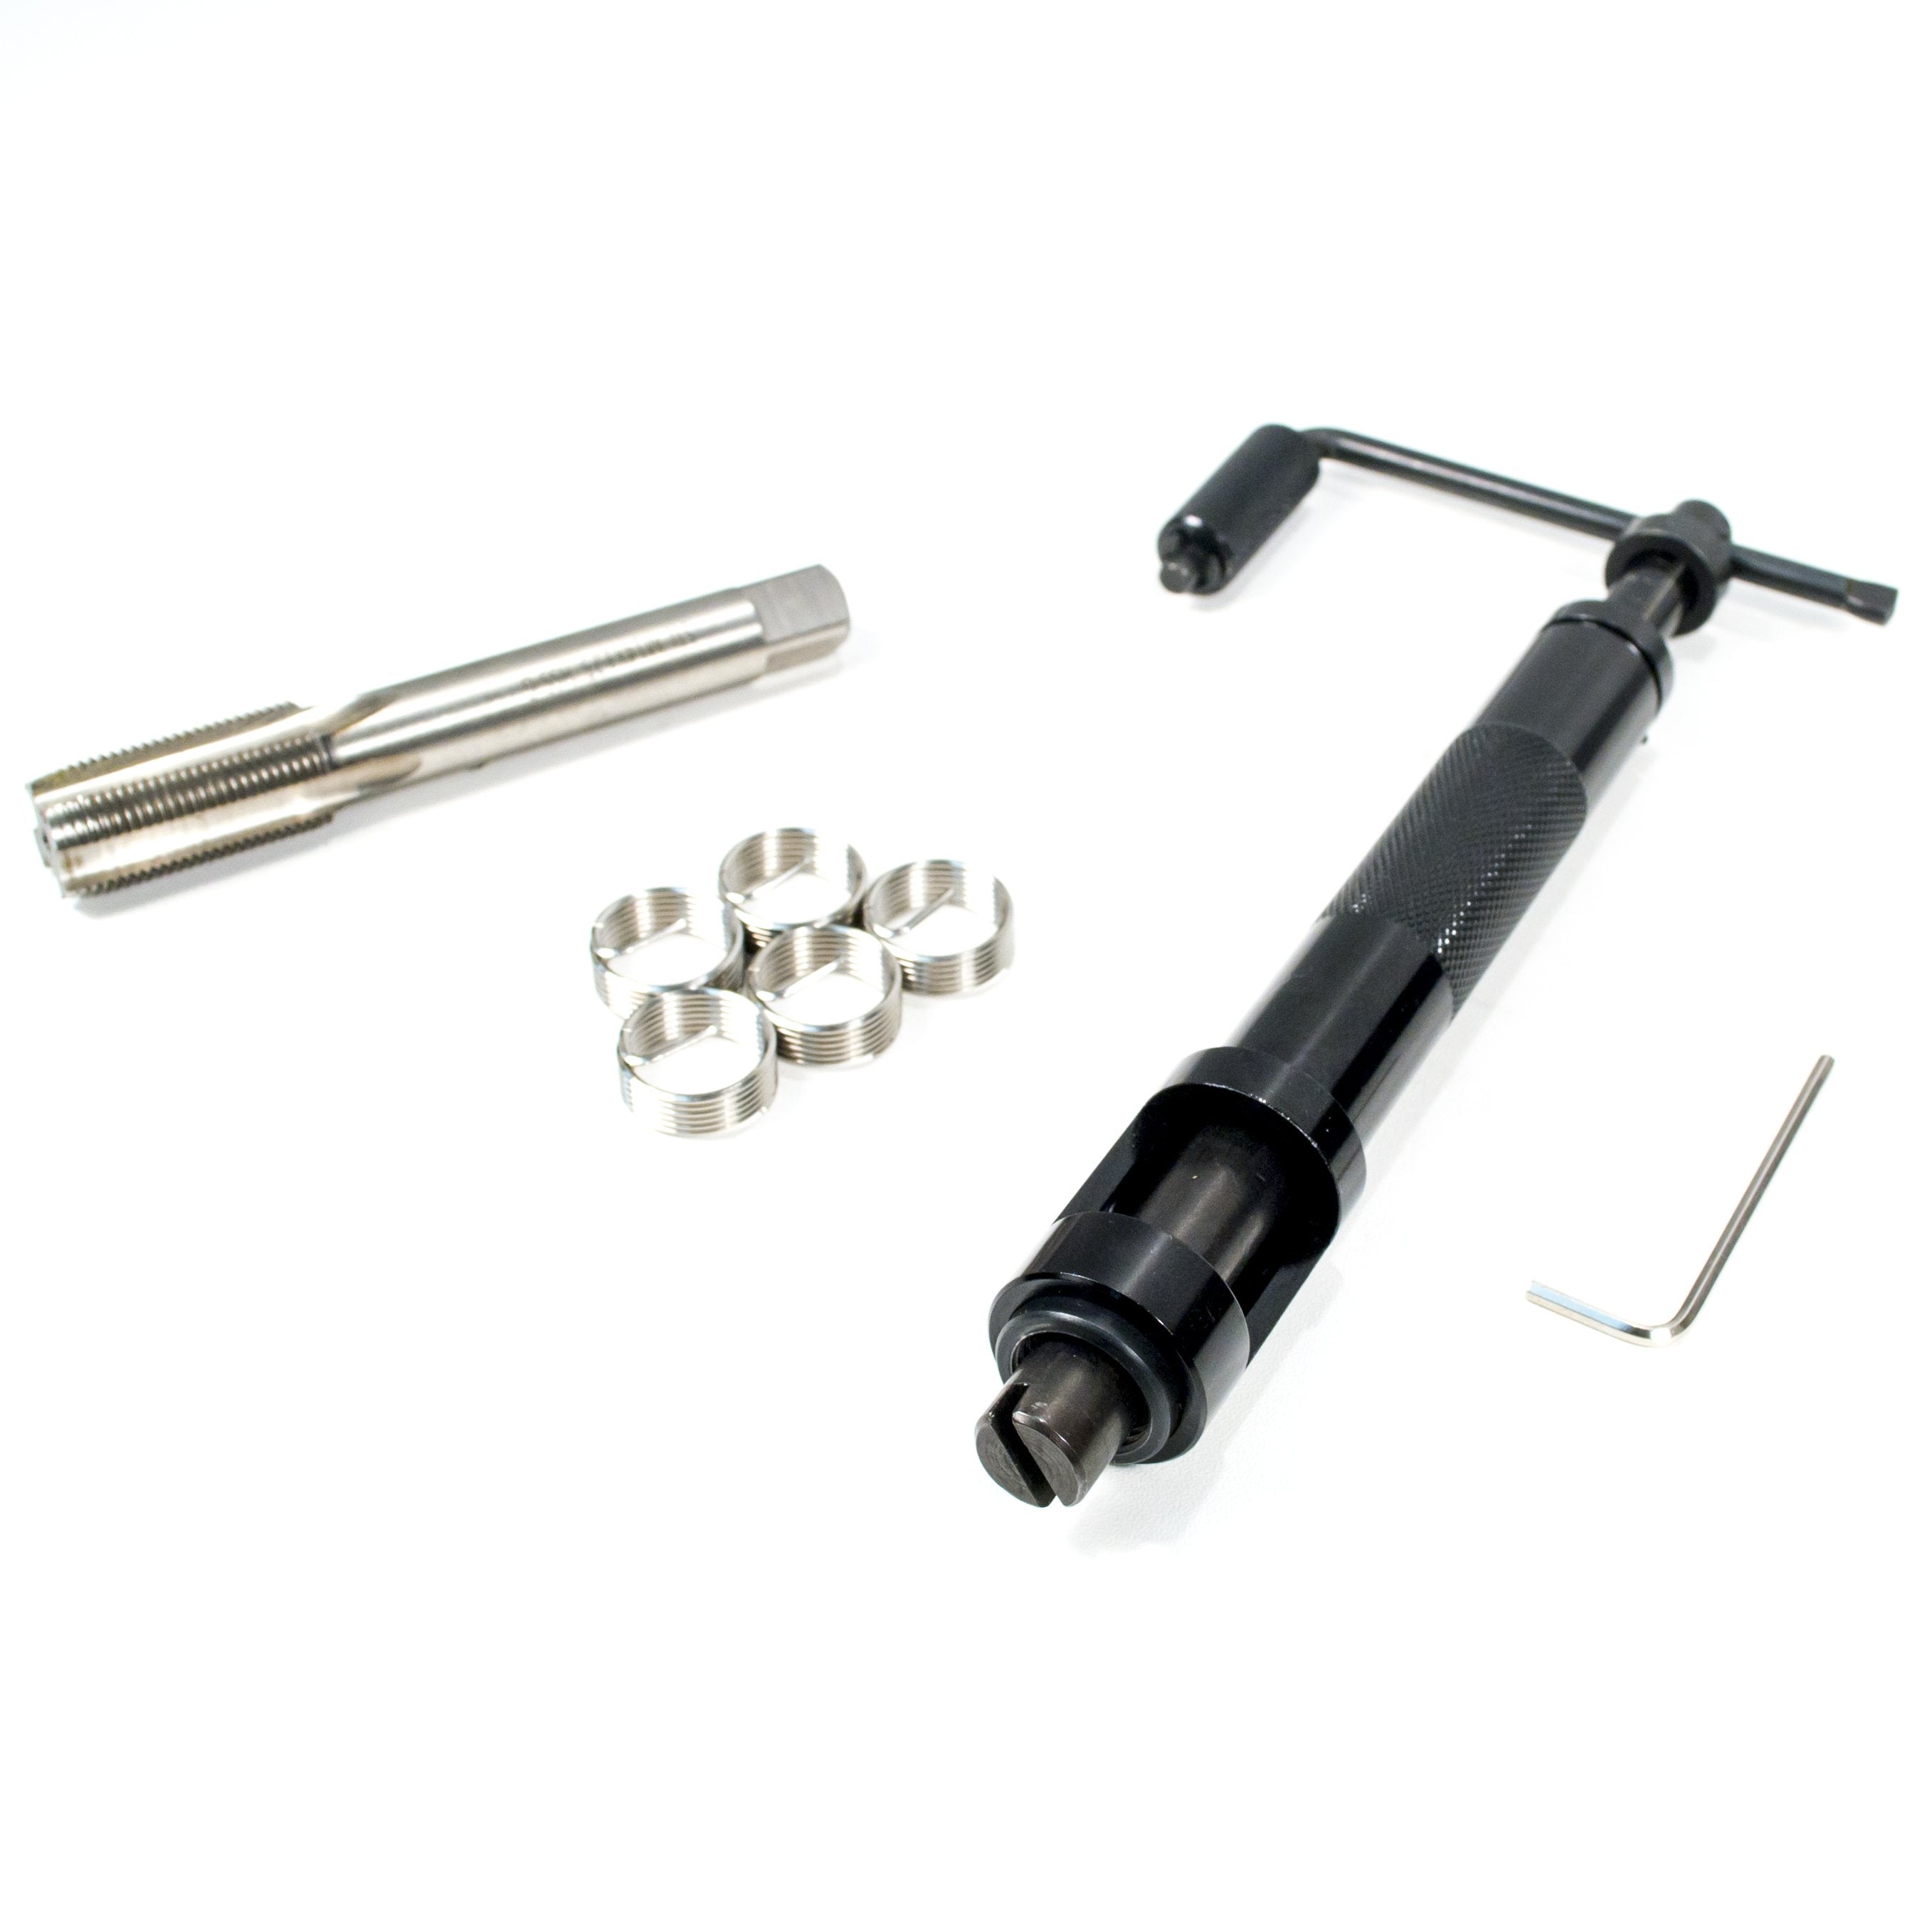 Professional Spark Plug Threaded Coil Insert Repair Tool Kit M12 x 1.5